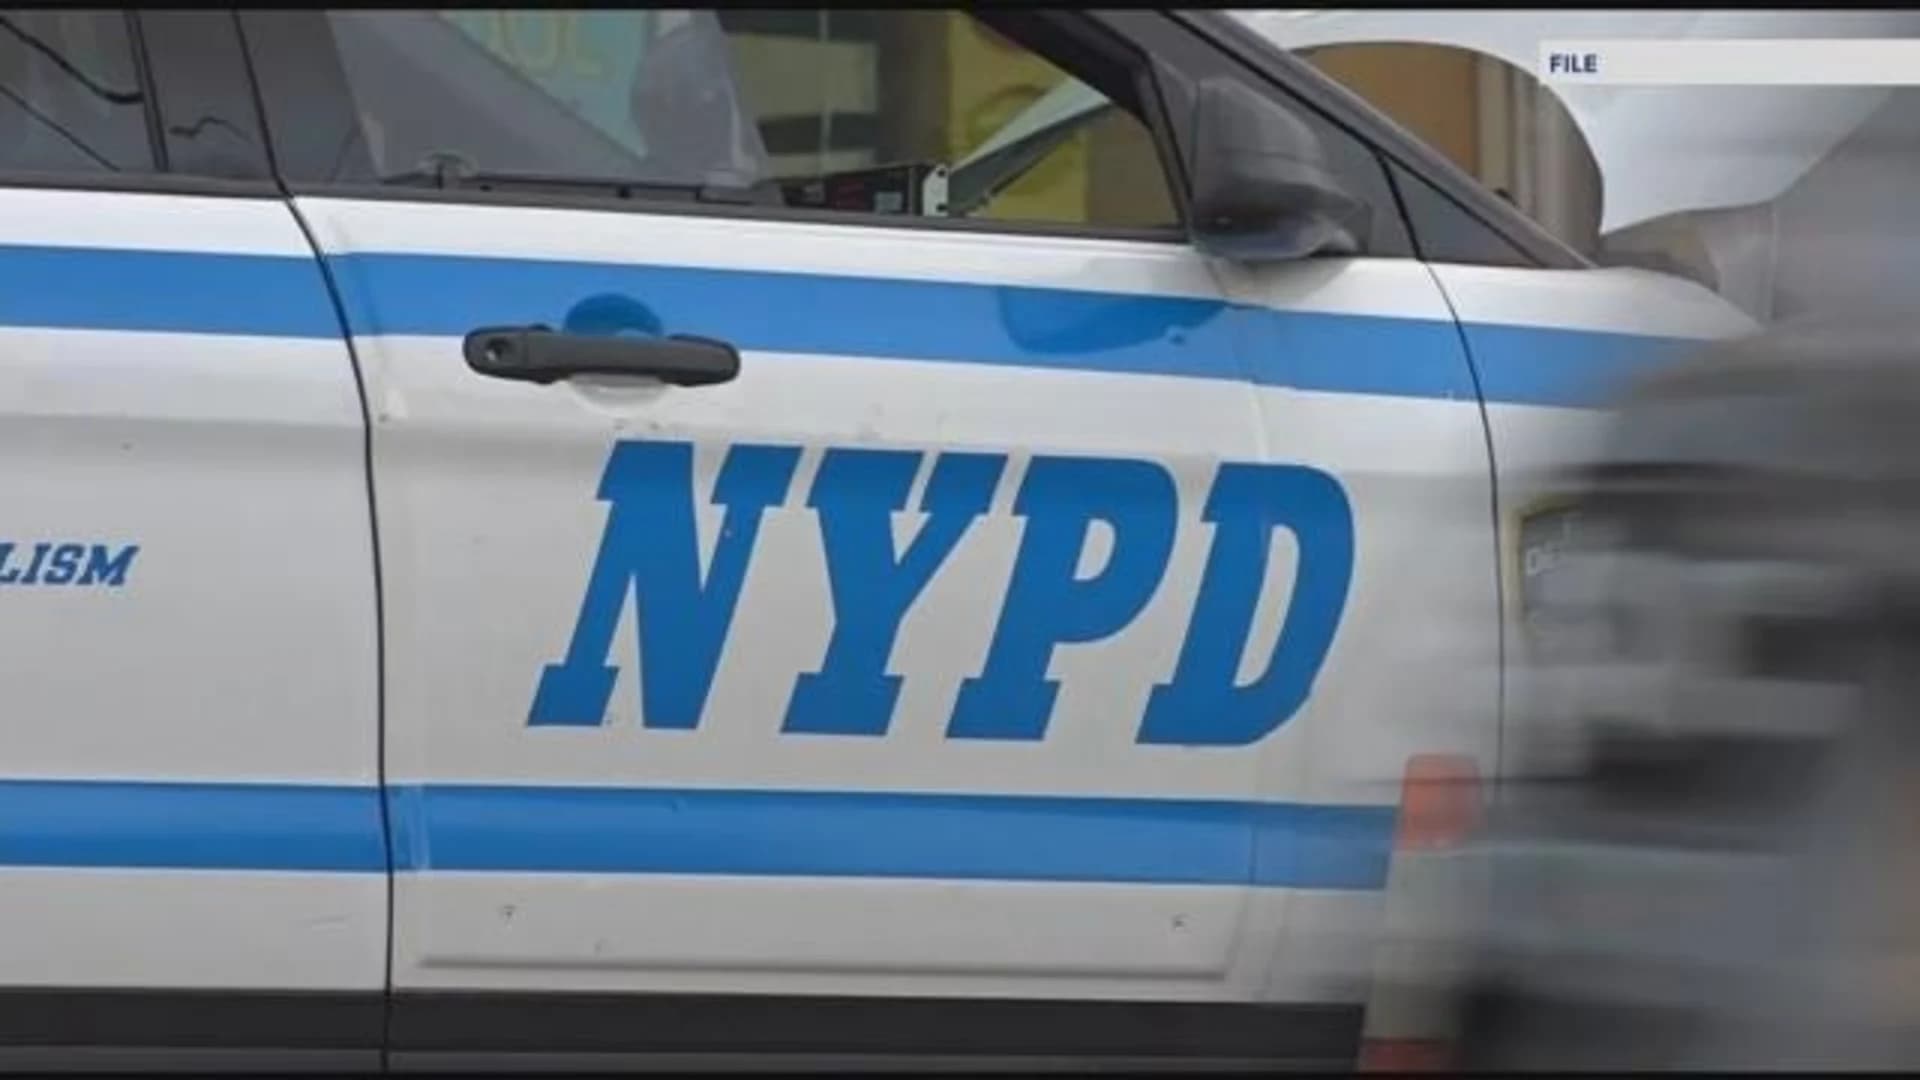 Judge blocks release of New York police discipline records